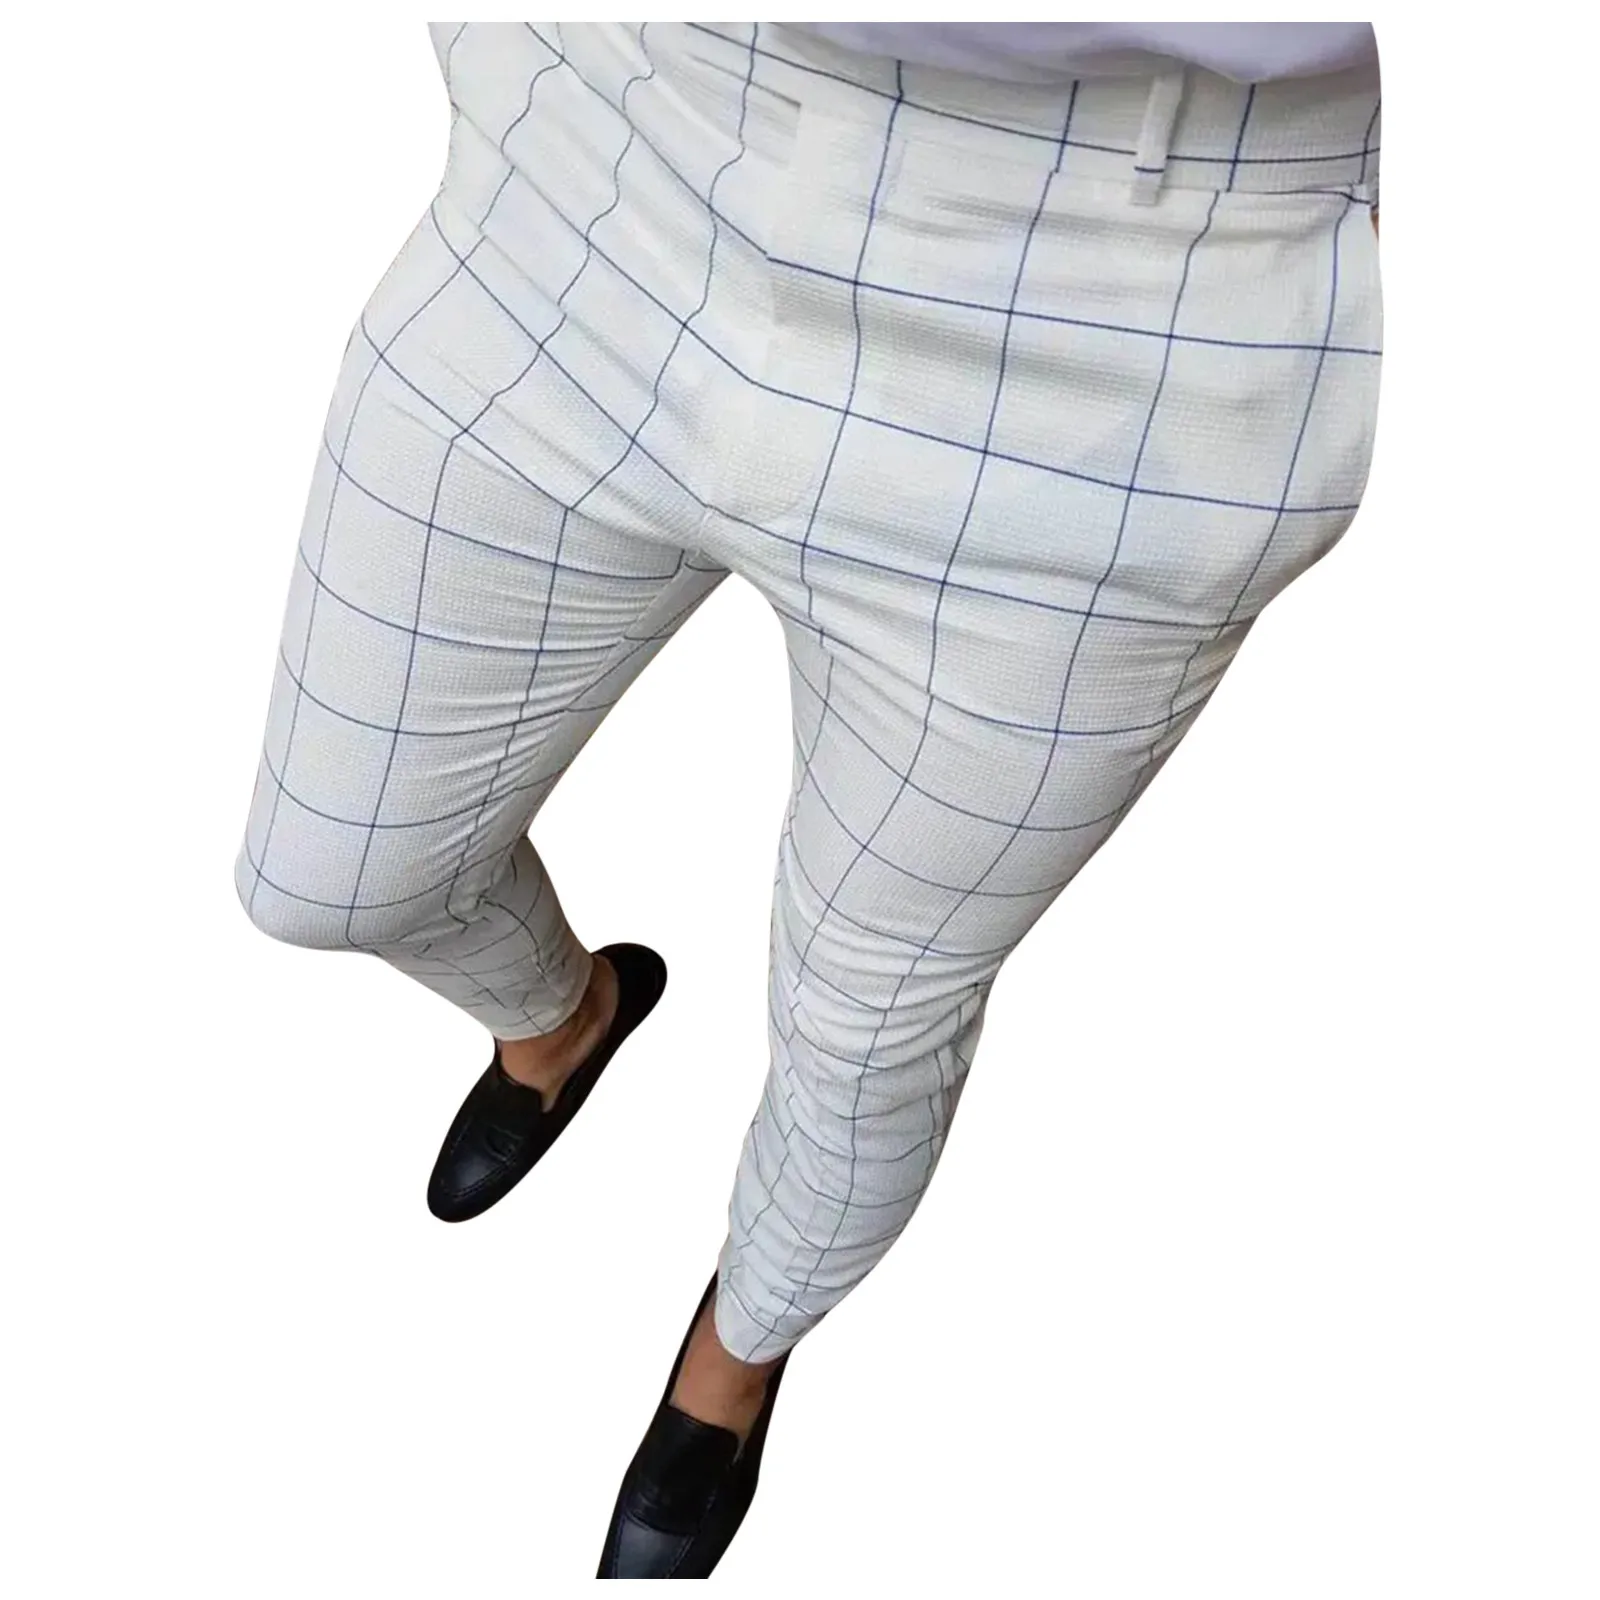 Men's Casual Plaid Pants Skinny Pencil Pants Zipper Elastic Waist Fashion Men's clothing Classic Pants Formal Trousers 2